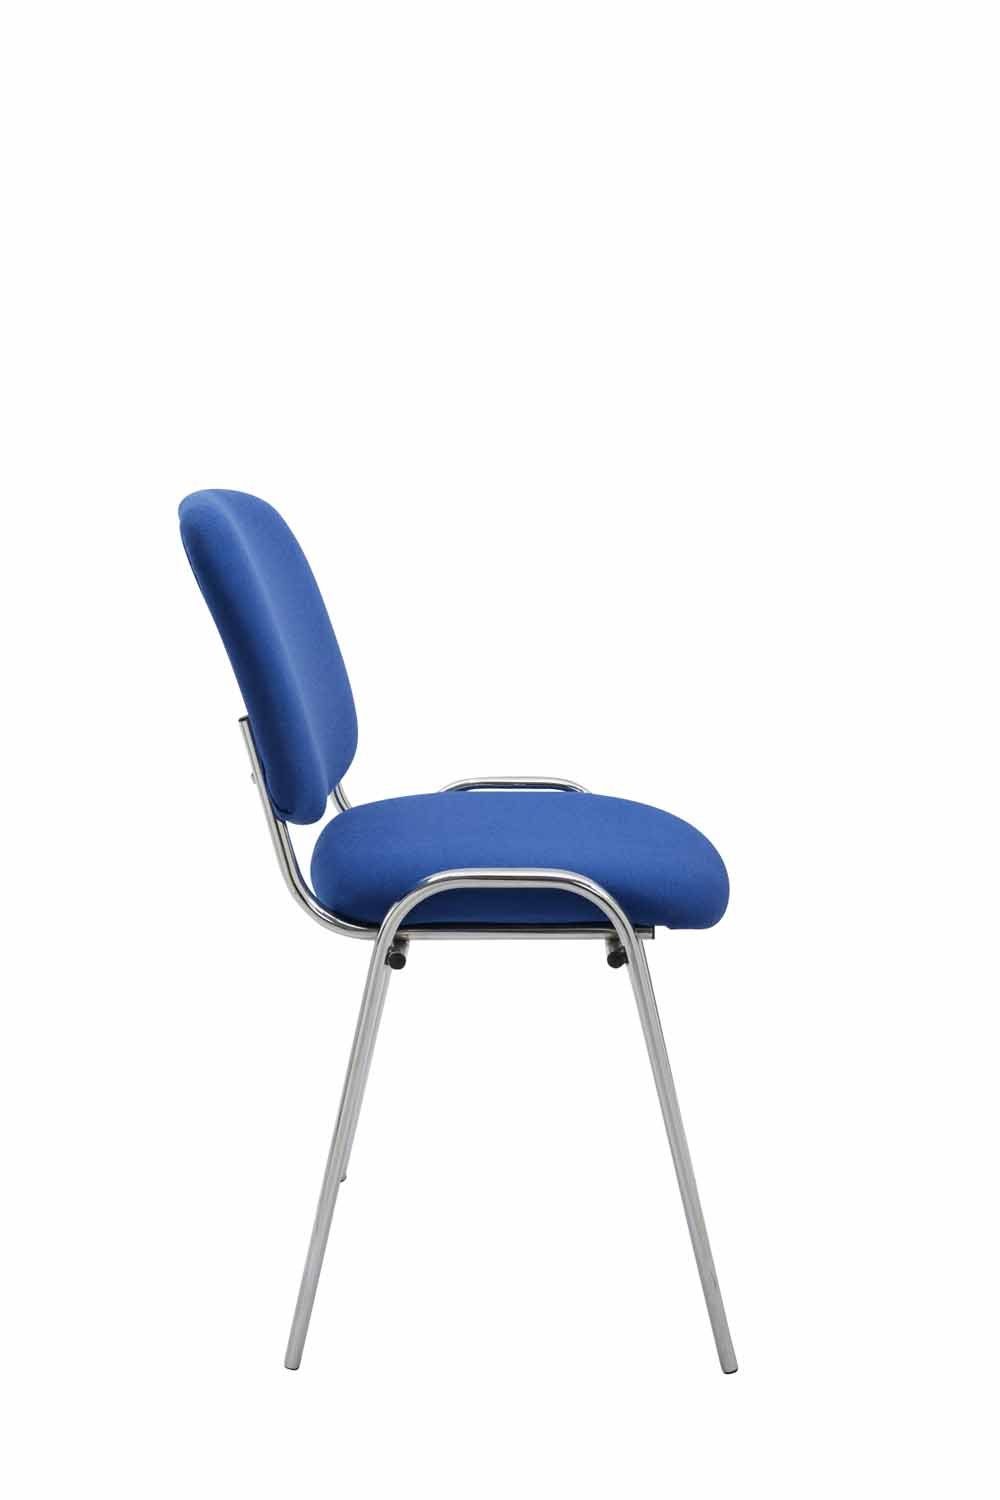 Stoff Messestuhl), Sitzfläche: Metall Besucherstuhl - Keen - TPFLiving - (Besprechungsstuhl - chrom Konferenzstuhl Gestell: hochwertiger blau Warteraumstuhl mit Polsterung